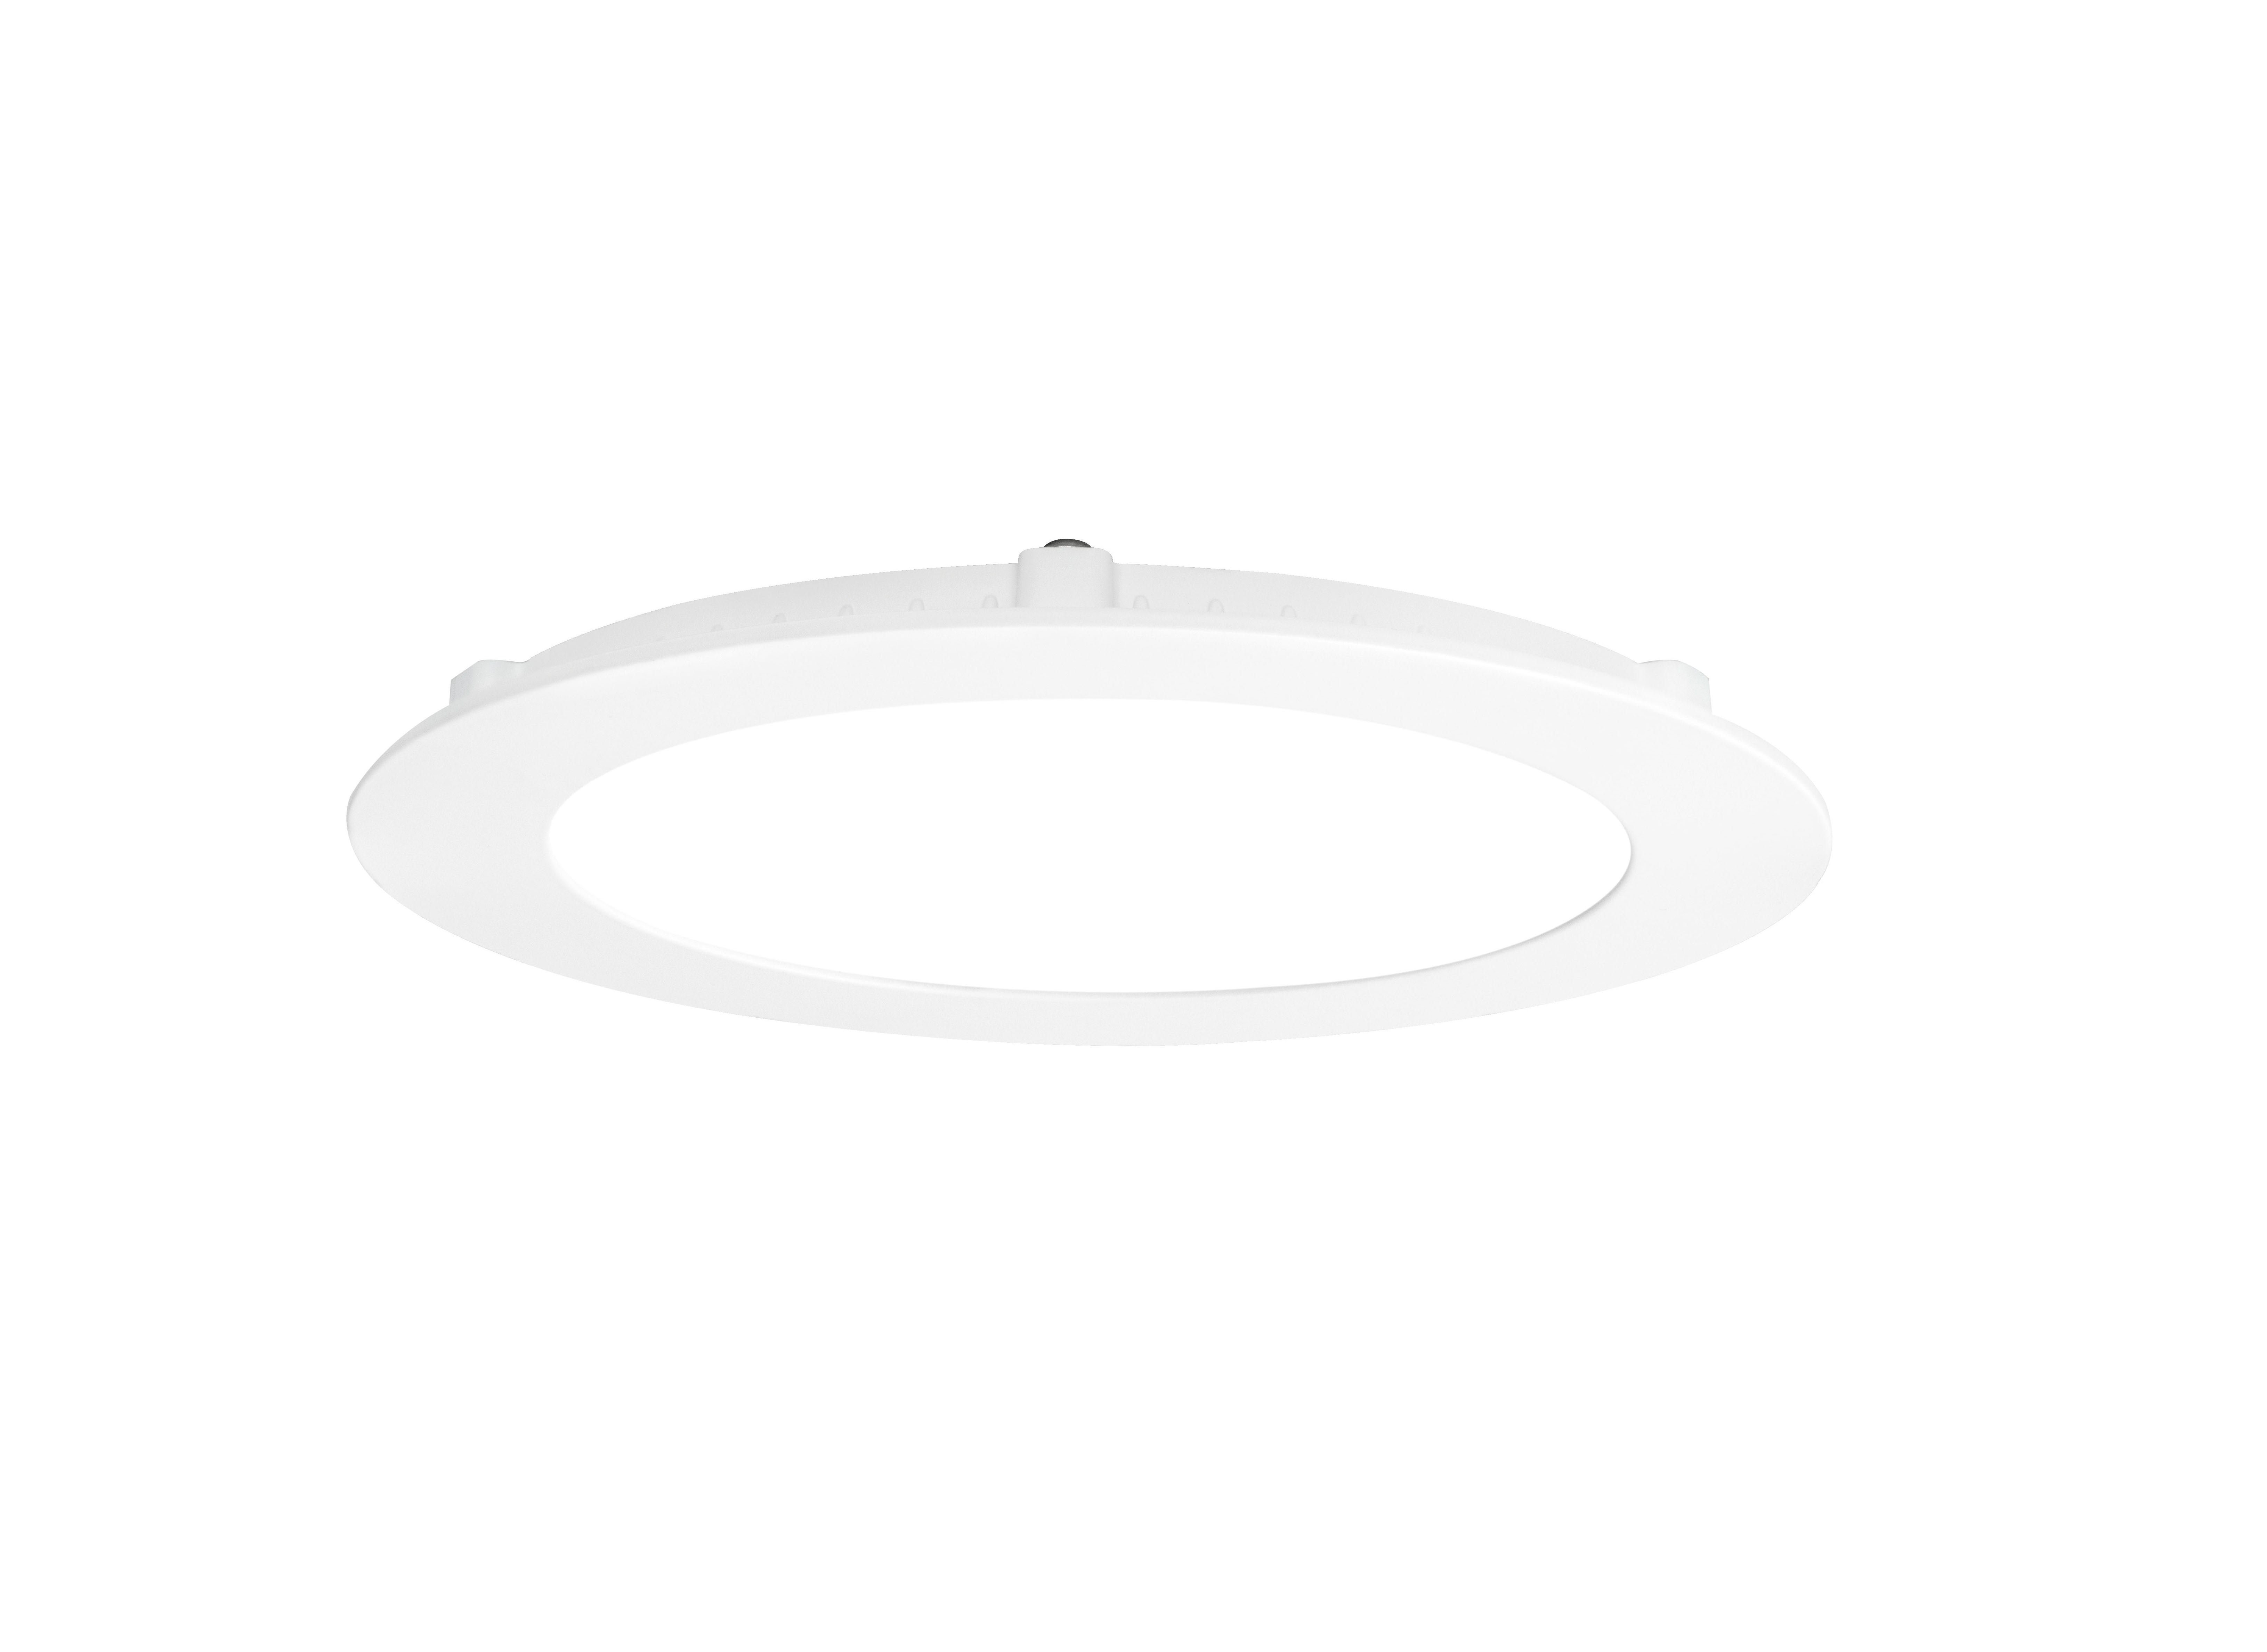 Aric - FLAT LED - Downlight plat, rond, fixe, blanc, 110, LED integ. 13W 4000K 980lm